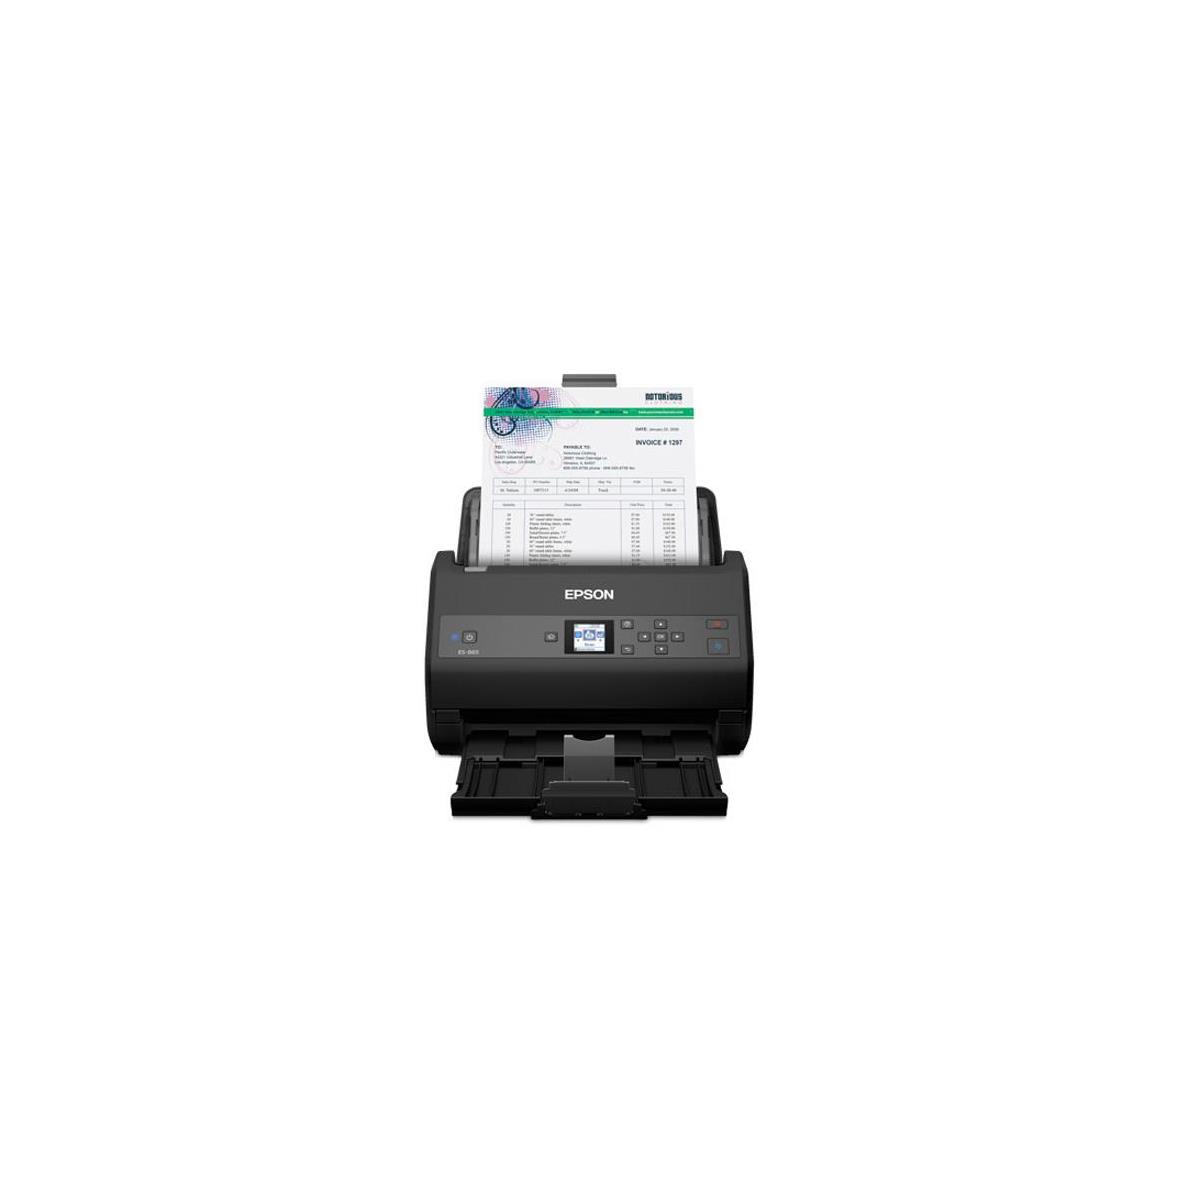 

Epson WorkForce ES-865 Color Duplex Doc Scanner